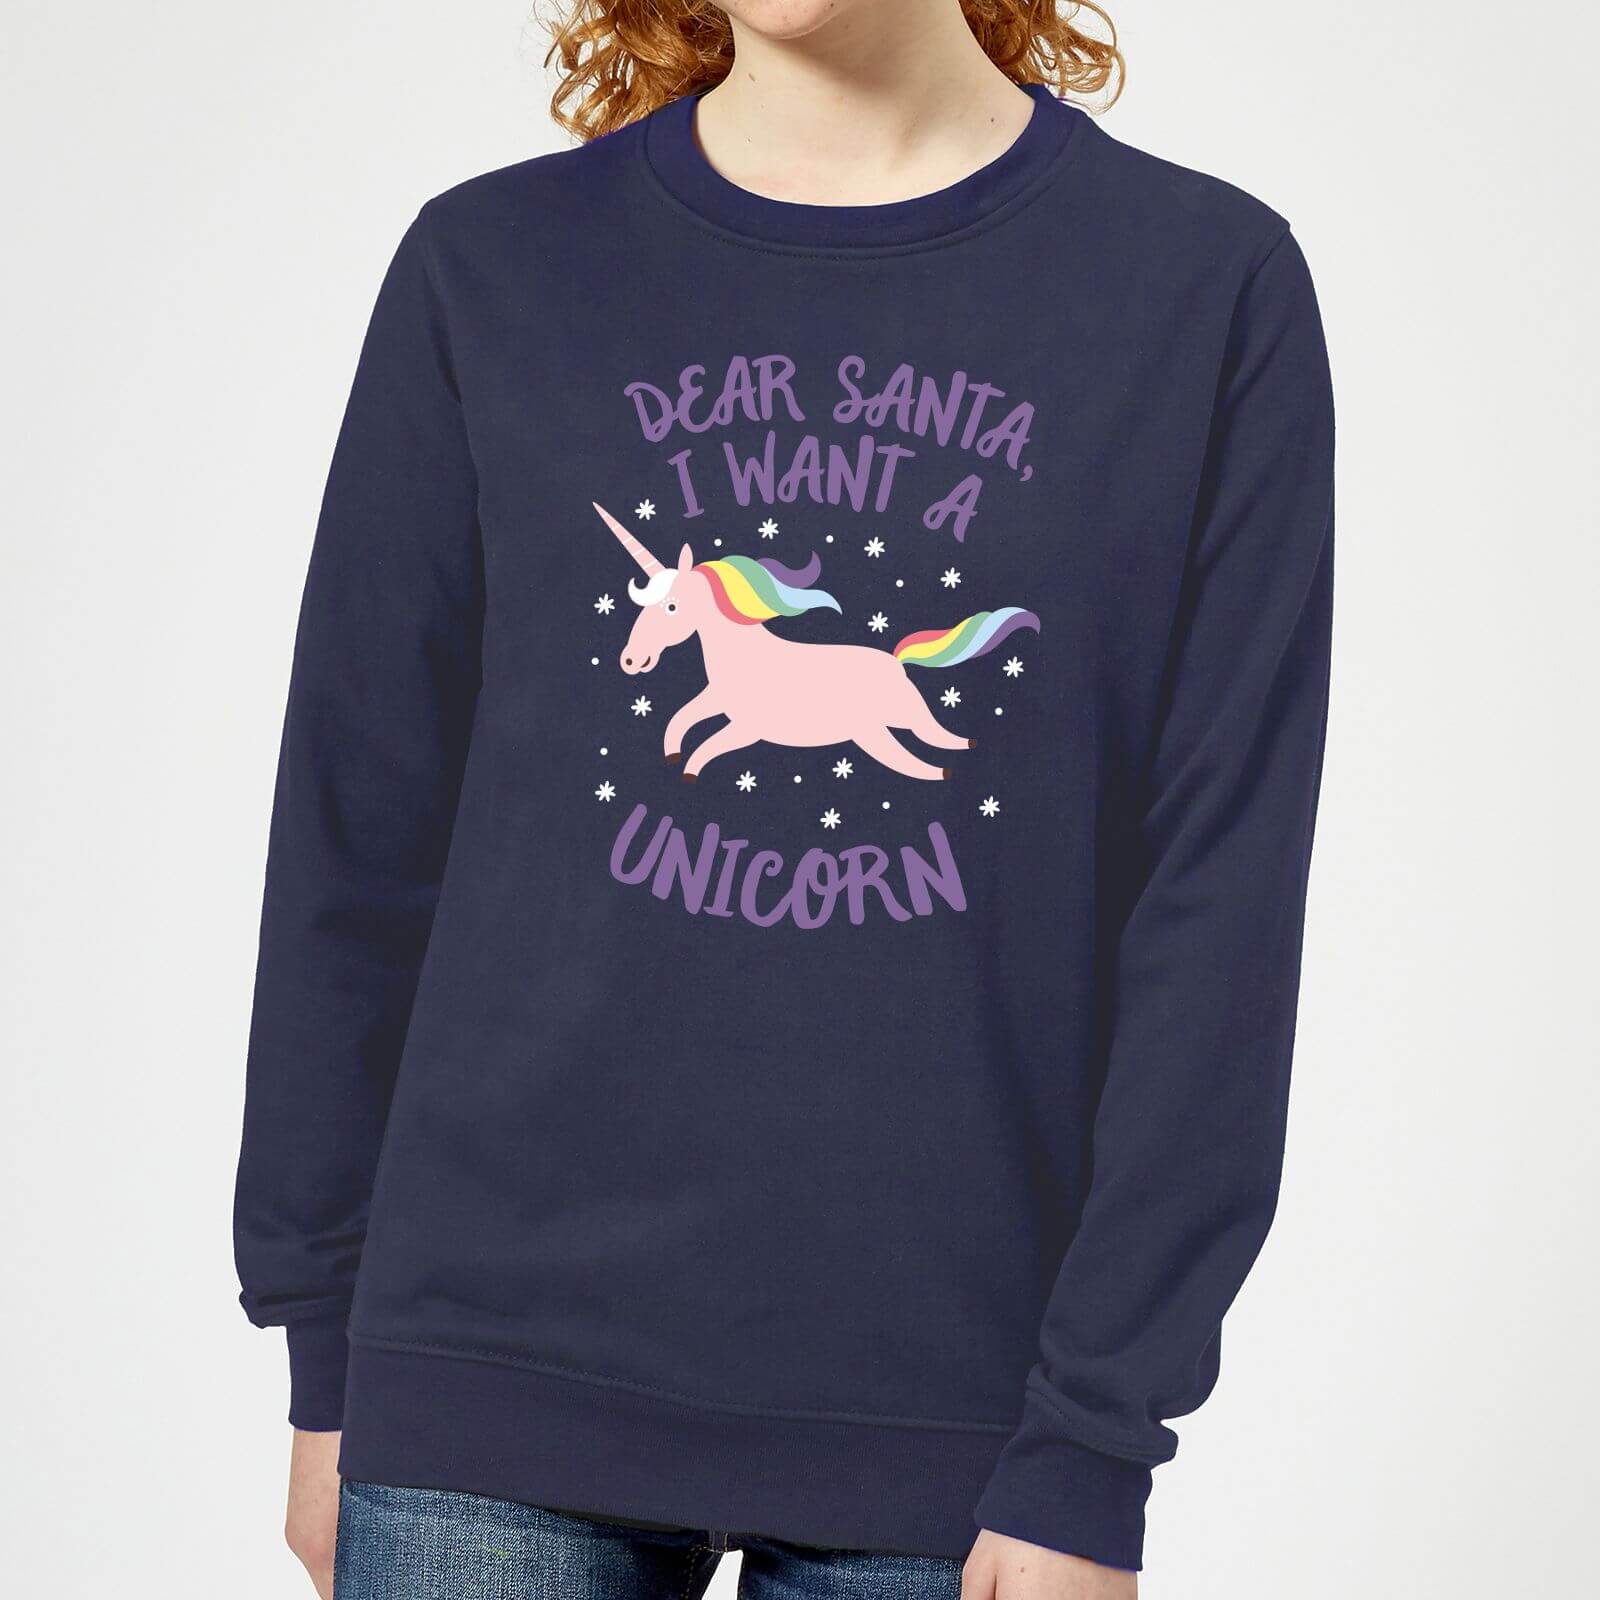 Dear Santa, I Want A Unicorn Women's Christmas Sweatshirt - Navy - XS